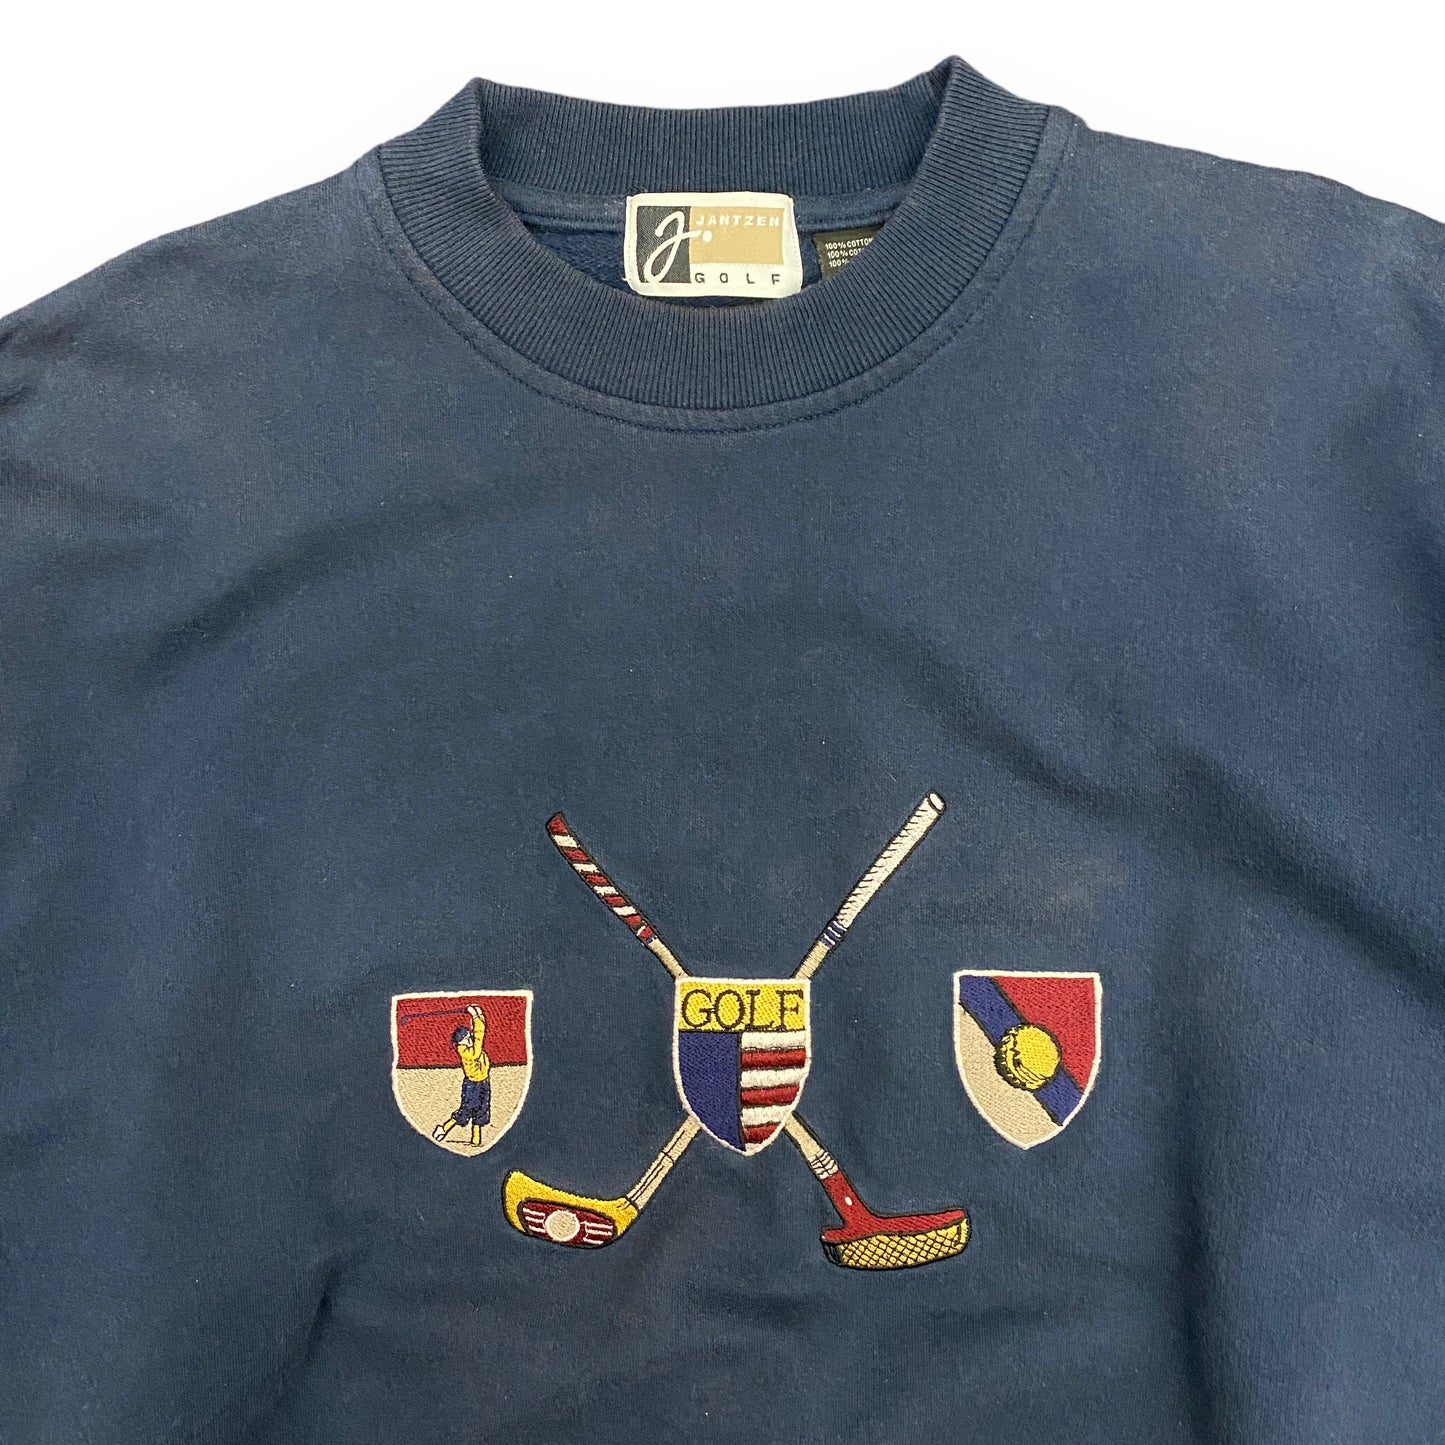 1990s Jantzen Golf Embroidered Crewneck Sweatshirt - Size Large